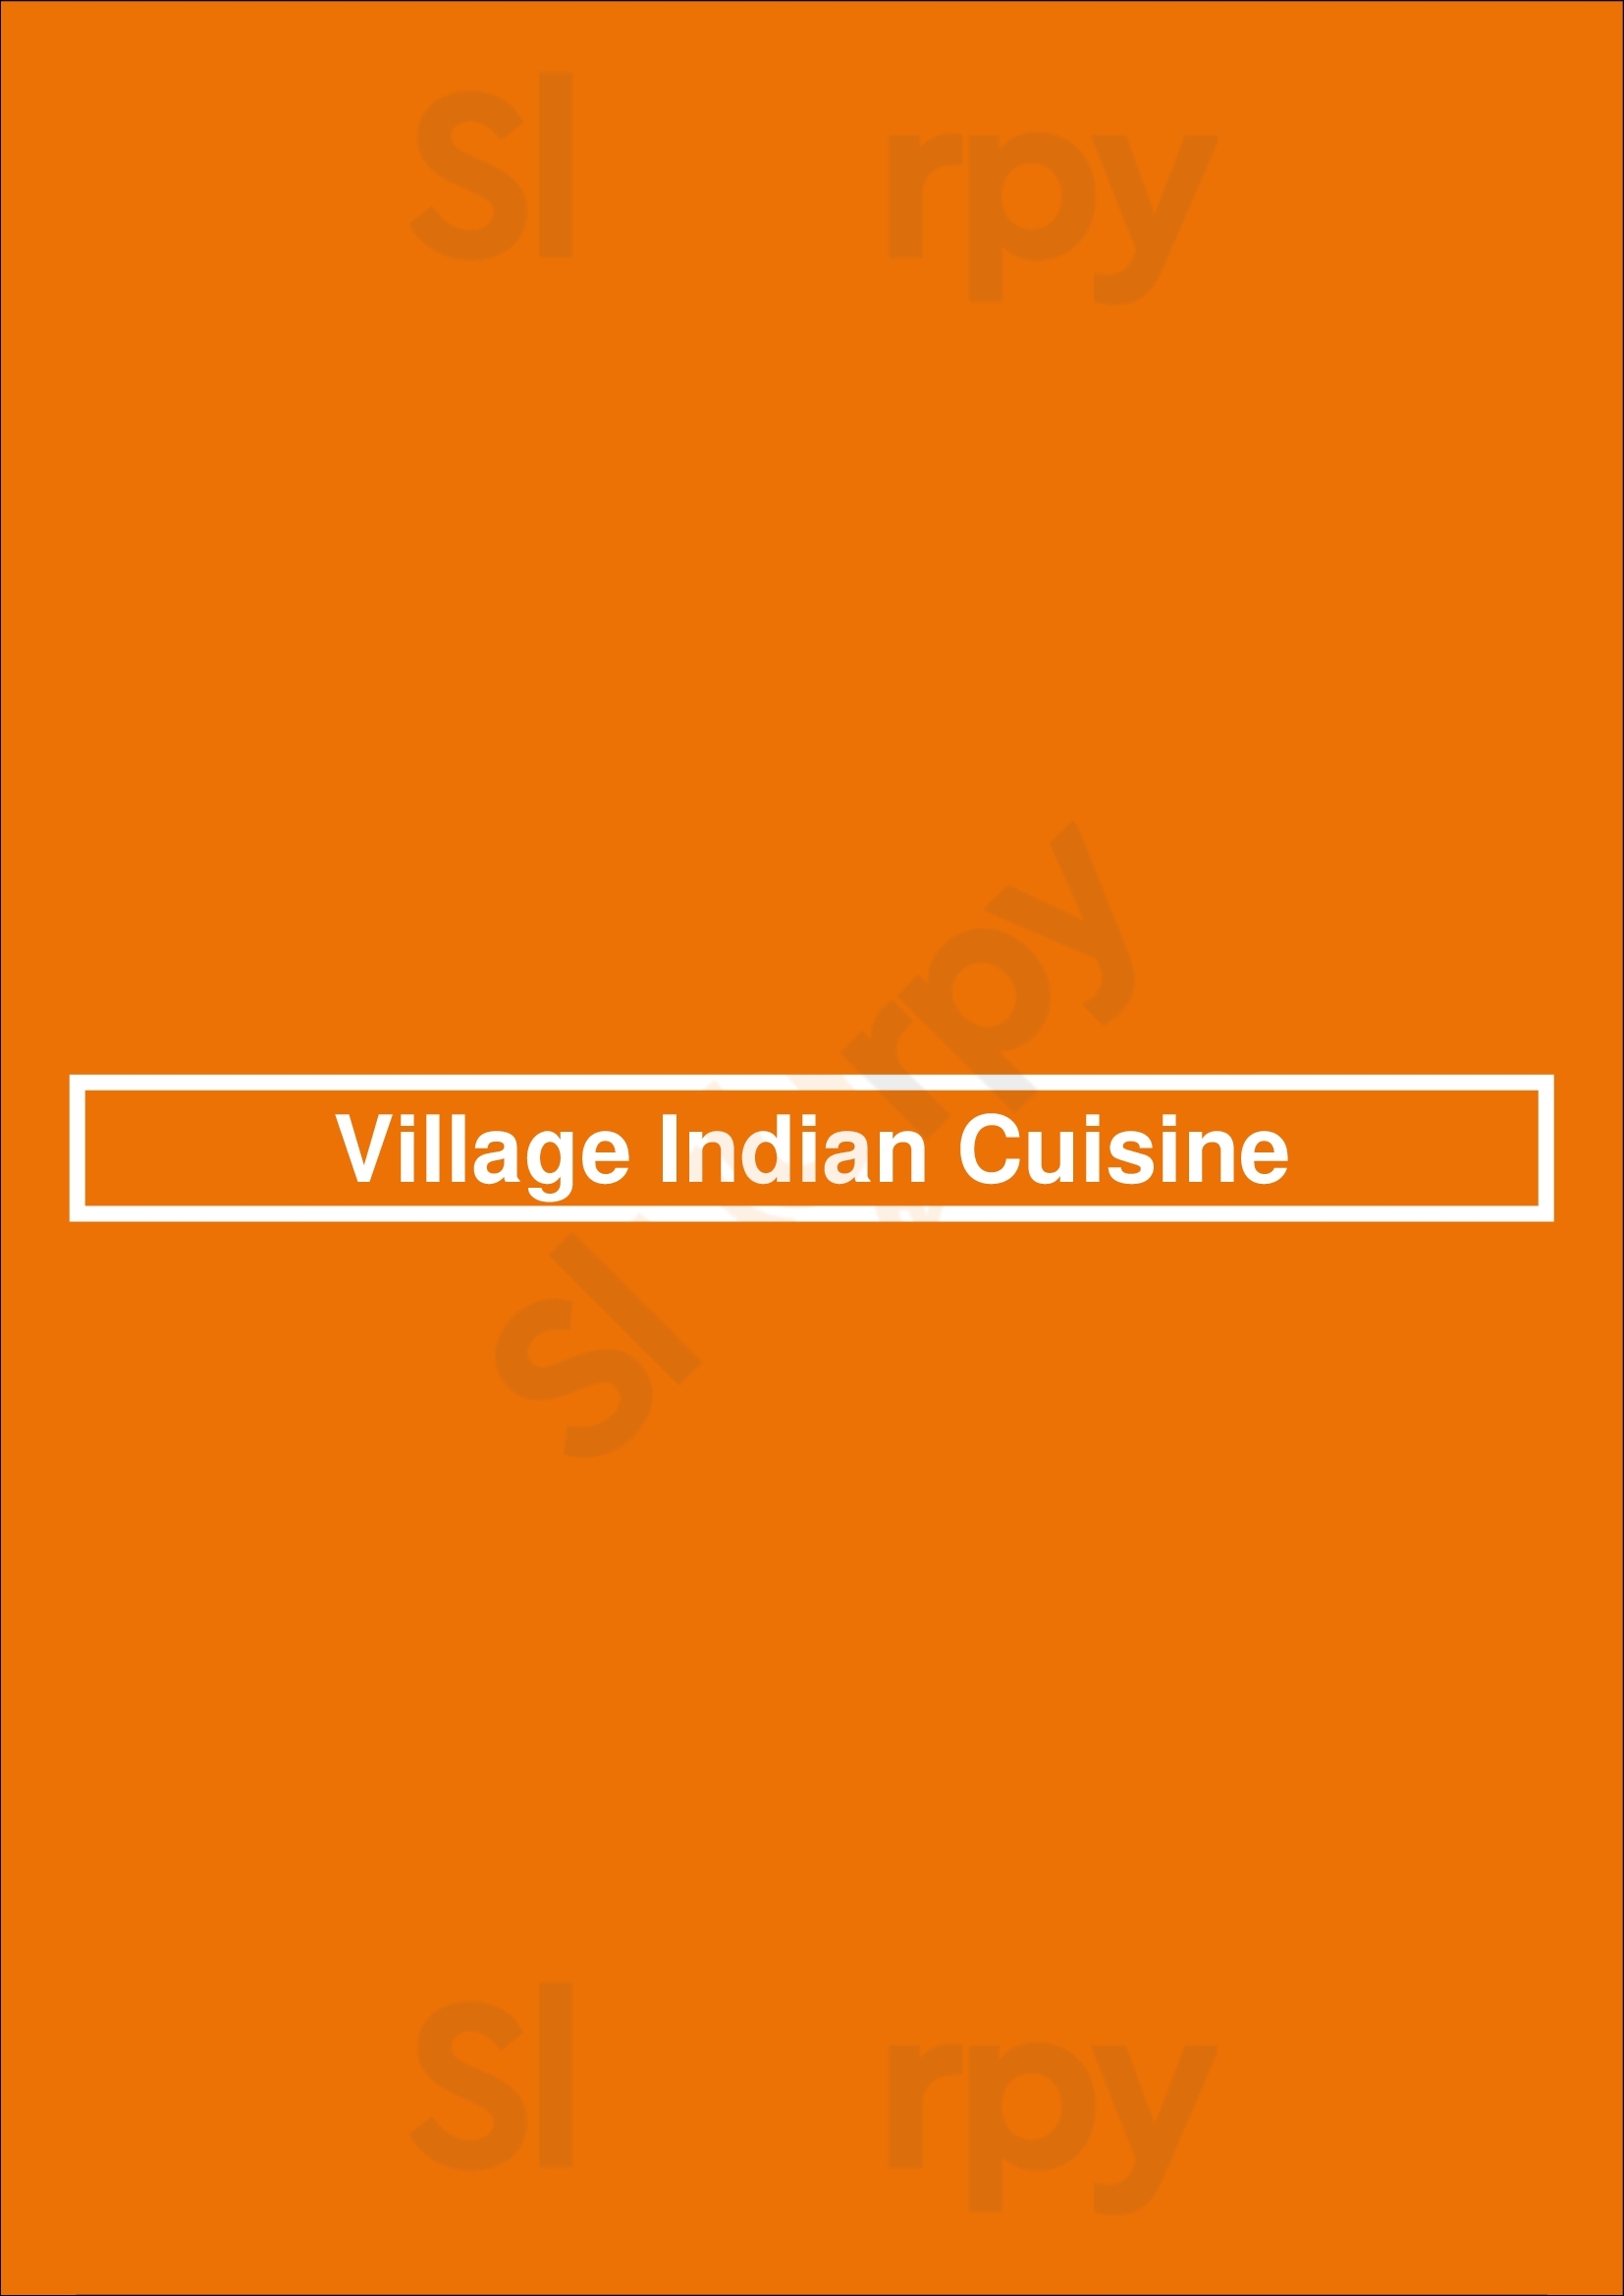 Village Indian Cuisine San Diego Menu - 1